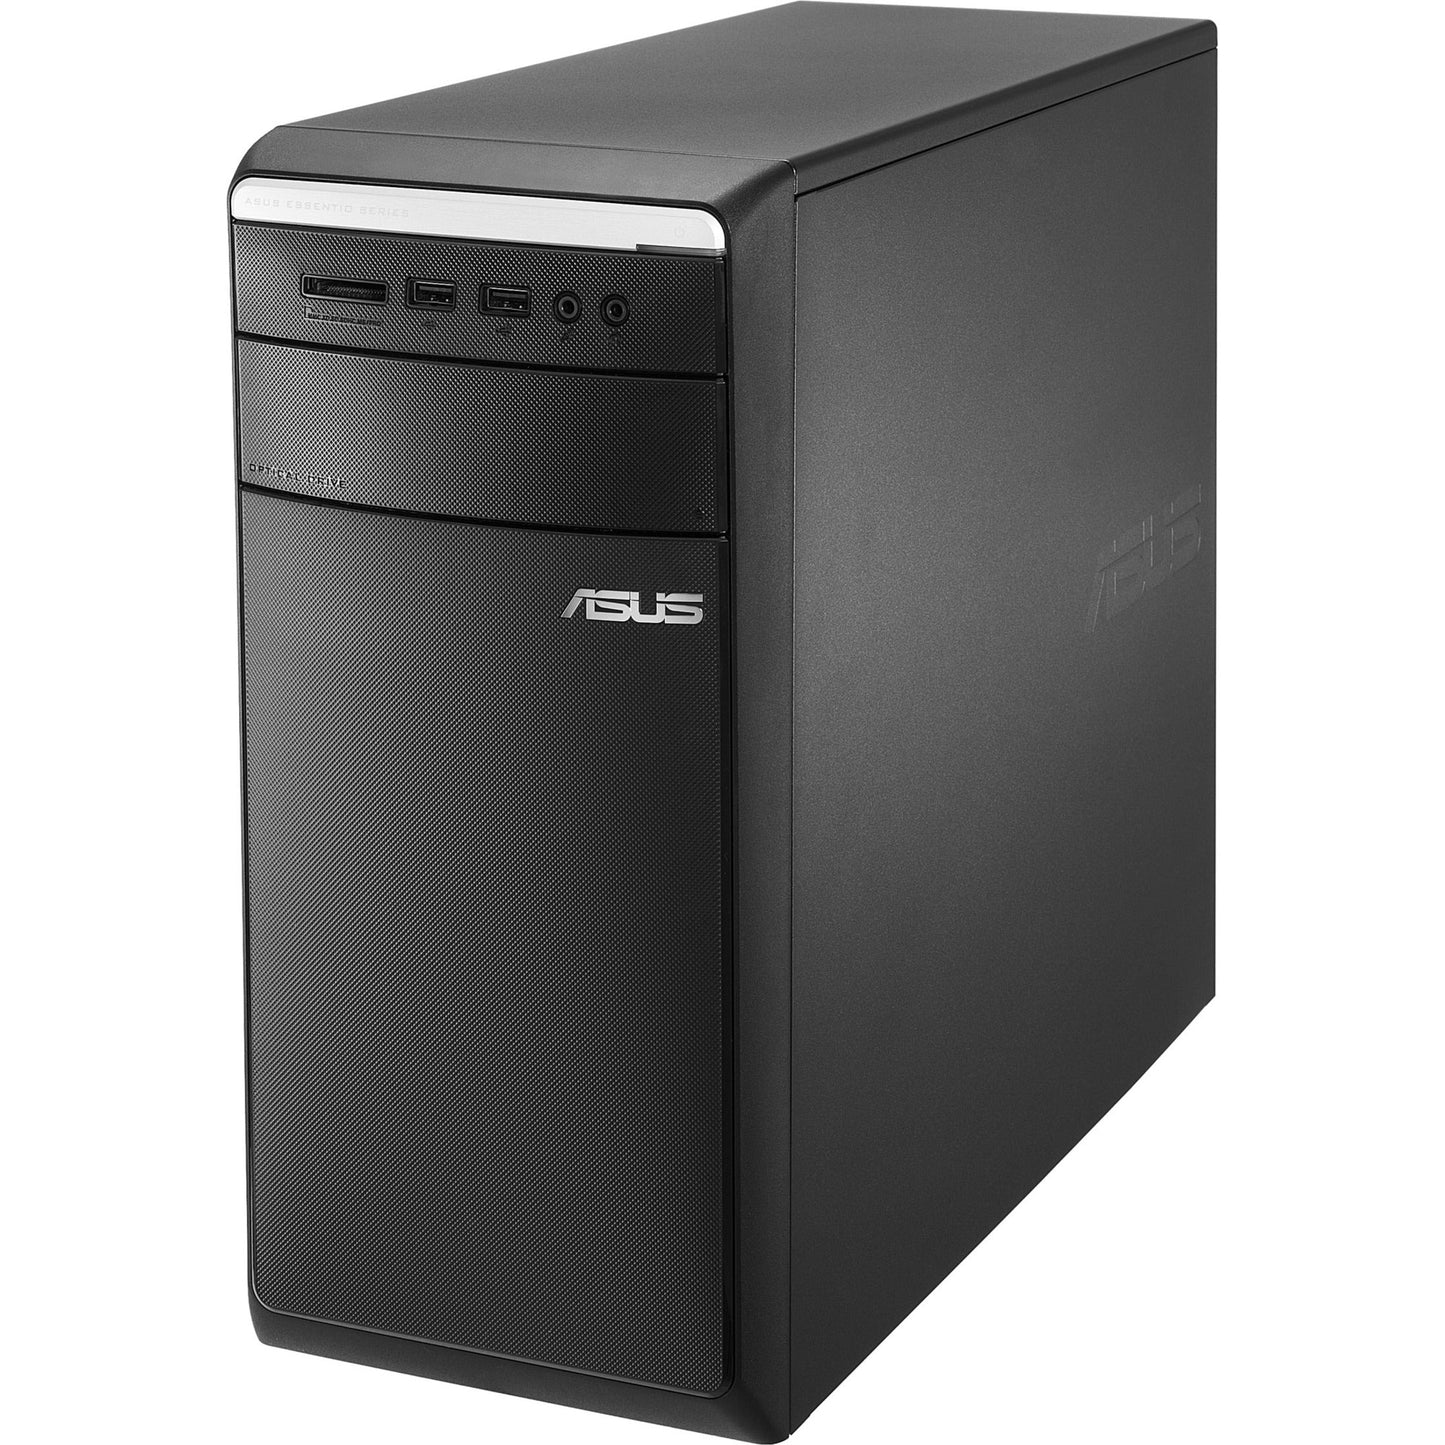 Asus M11AD-US003S Desktop Computer - Intel Core i5 4th Gen i5-4440S Quad-core (4 Core) 2.80 GHz - 6 GB RAM DDR3 SDRAM - 1 TB HDD - Tower